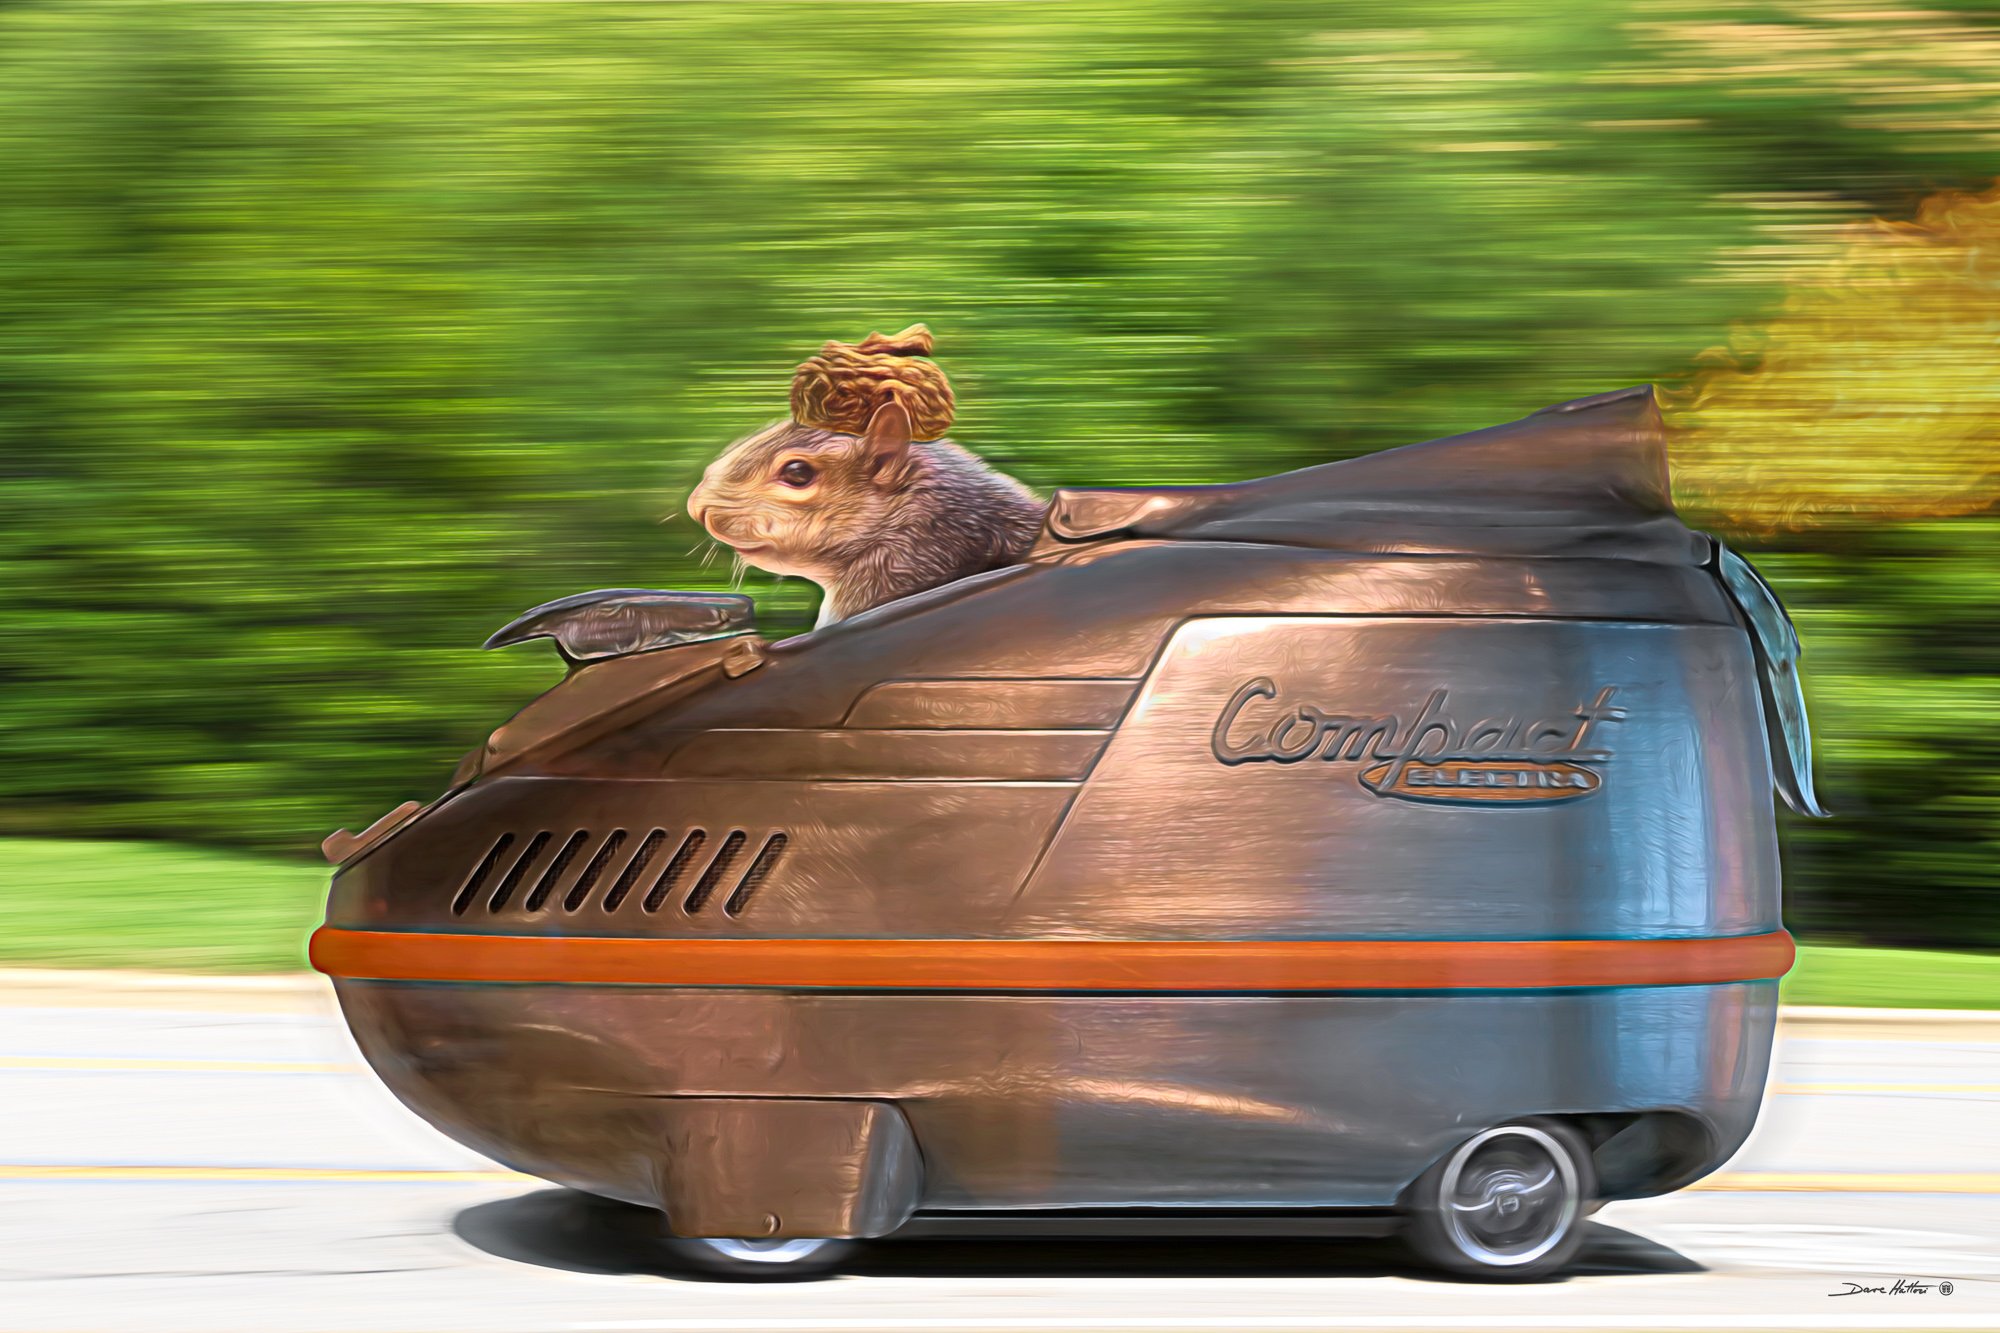 "Go Squirrel Racer Go!"